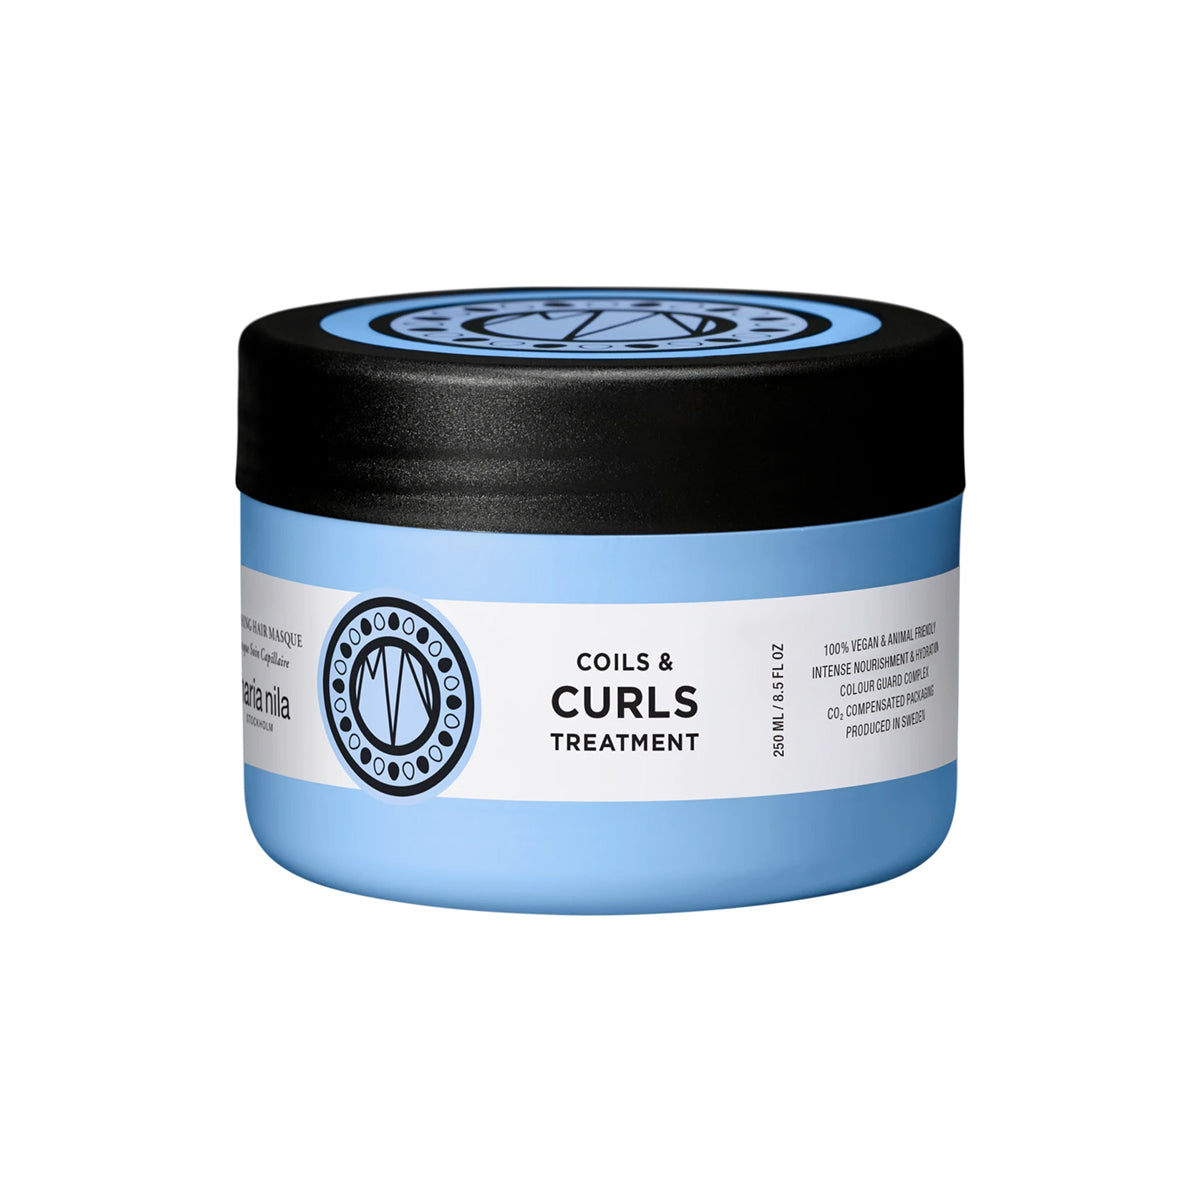 Coils & Curls Treatment Masque 250ml